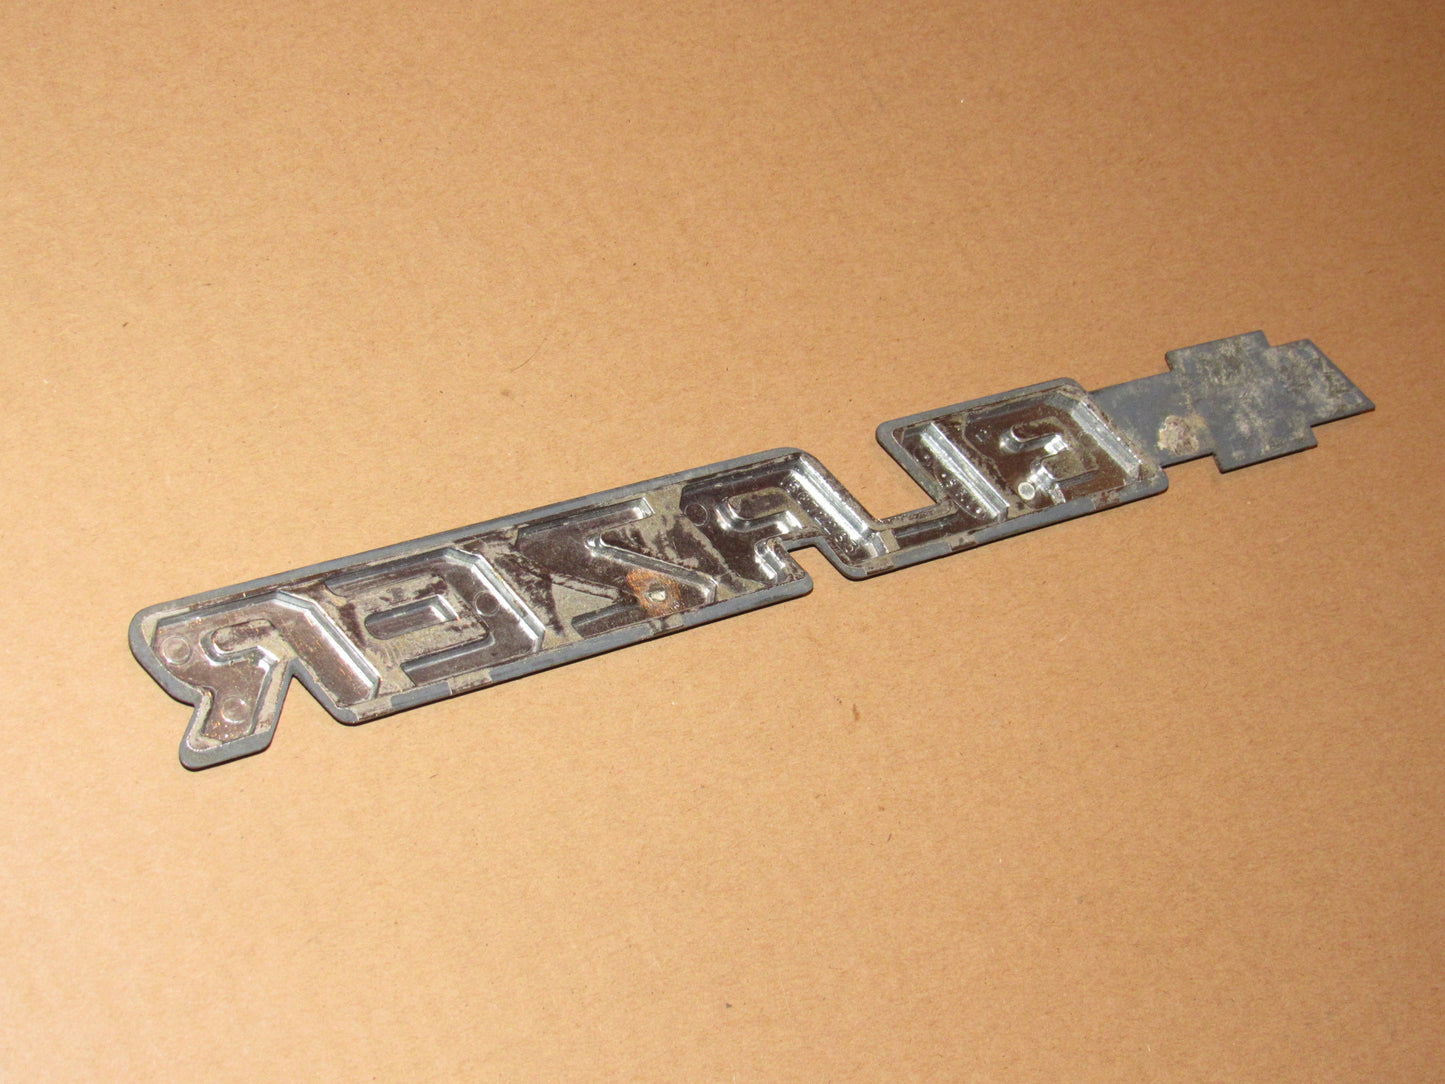 98-05 Chevrolet Blazer OEM Rear Door Tailgate Blazer Badge Emblem